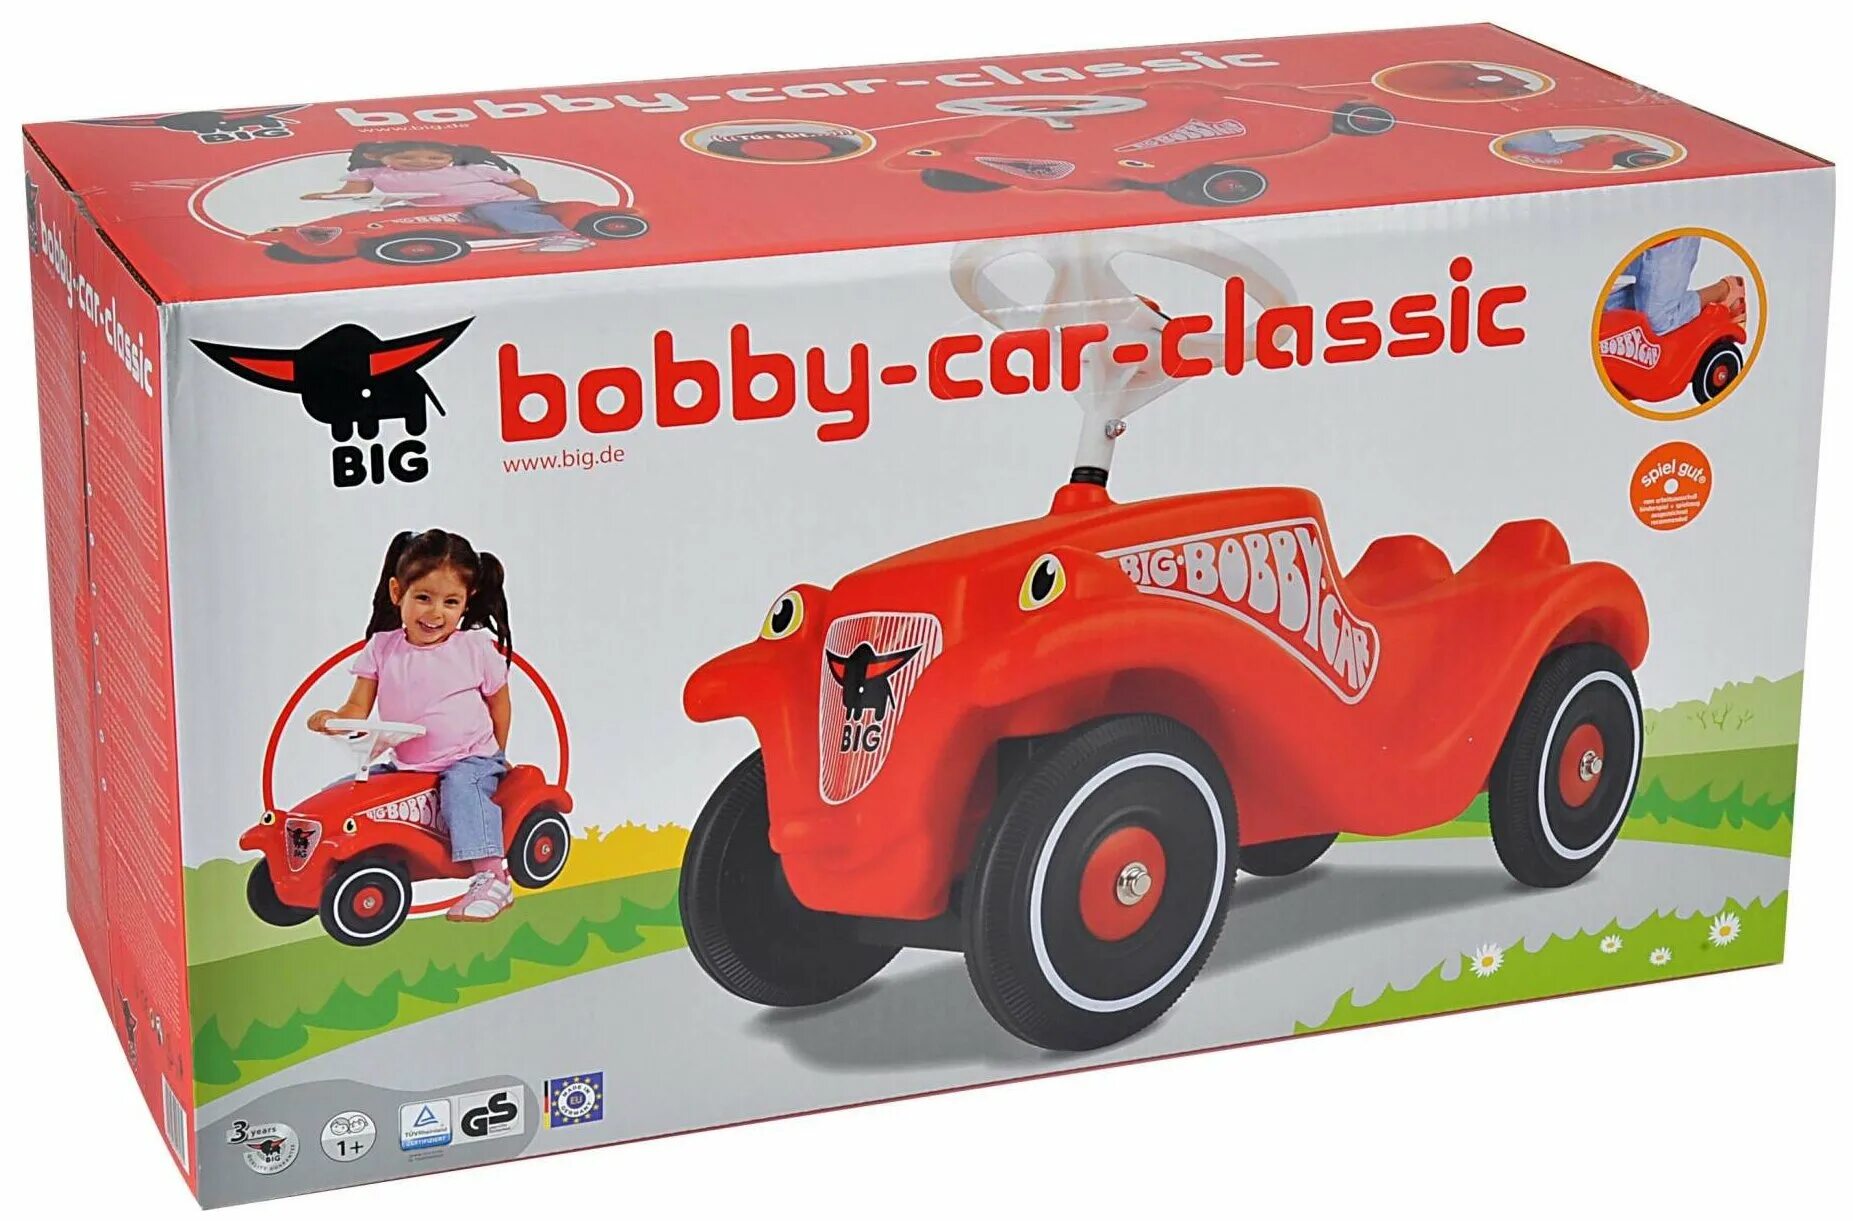 Включи машина бобби. Bobby car Classic 1303. Каталка-толокар big Bobby car Classic Dolphin (1309) со звуковыми эффектами. Красные машинки игрушки Bobby car. Машинка big Bobby вид снизу.